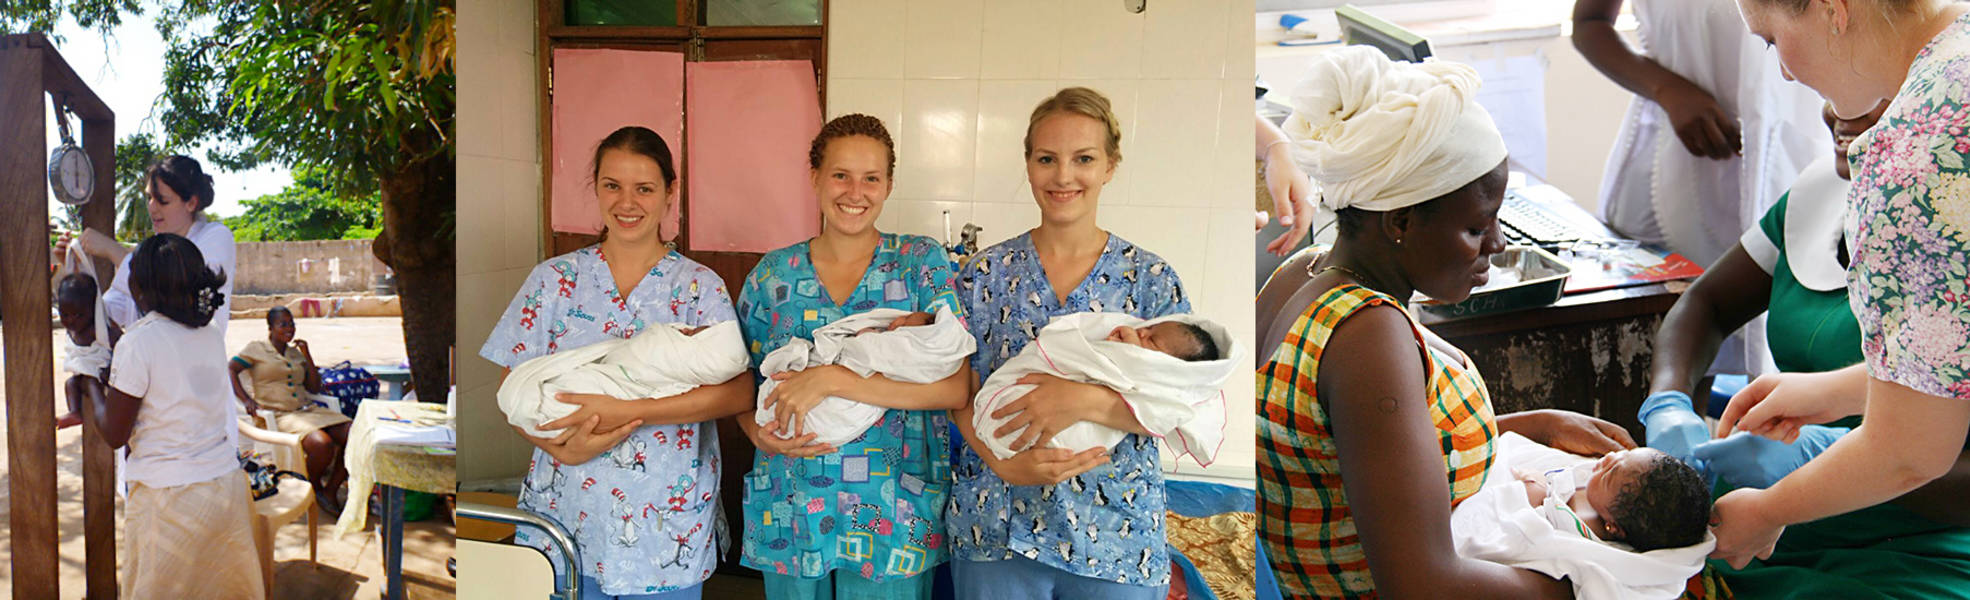 Voluntary work in obstetrics in Ghana